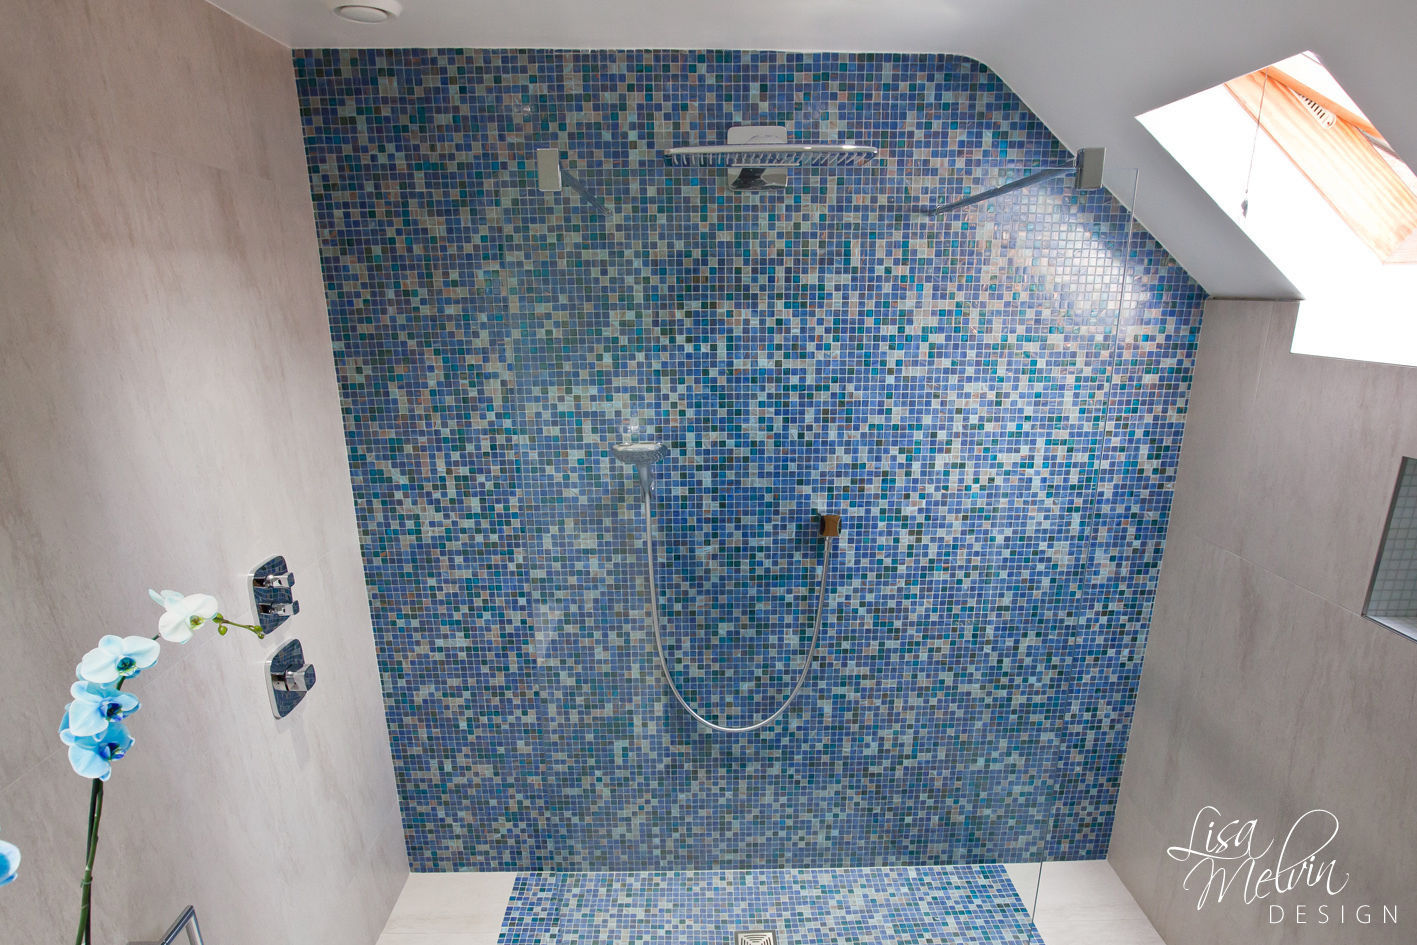 Shower & Mosaic Wall Lisa Melvin Design Salle de bain moderne